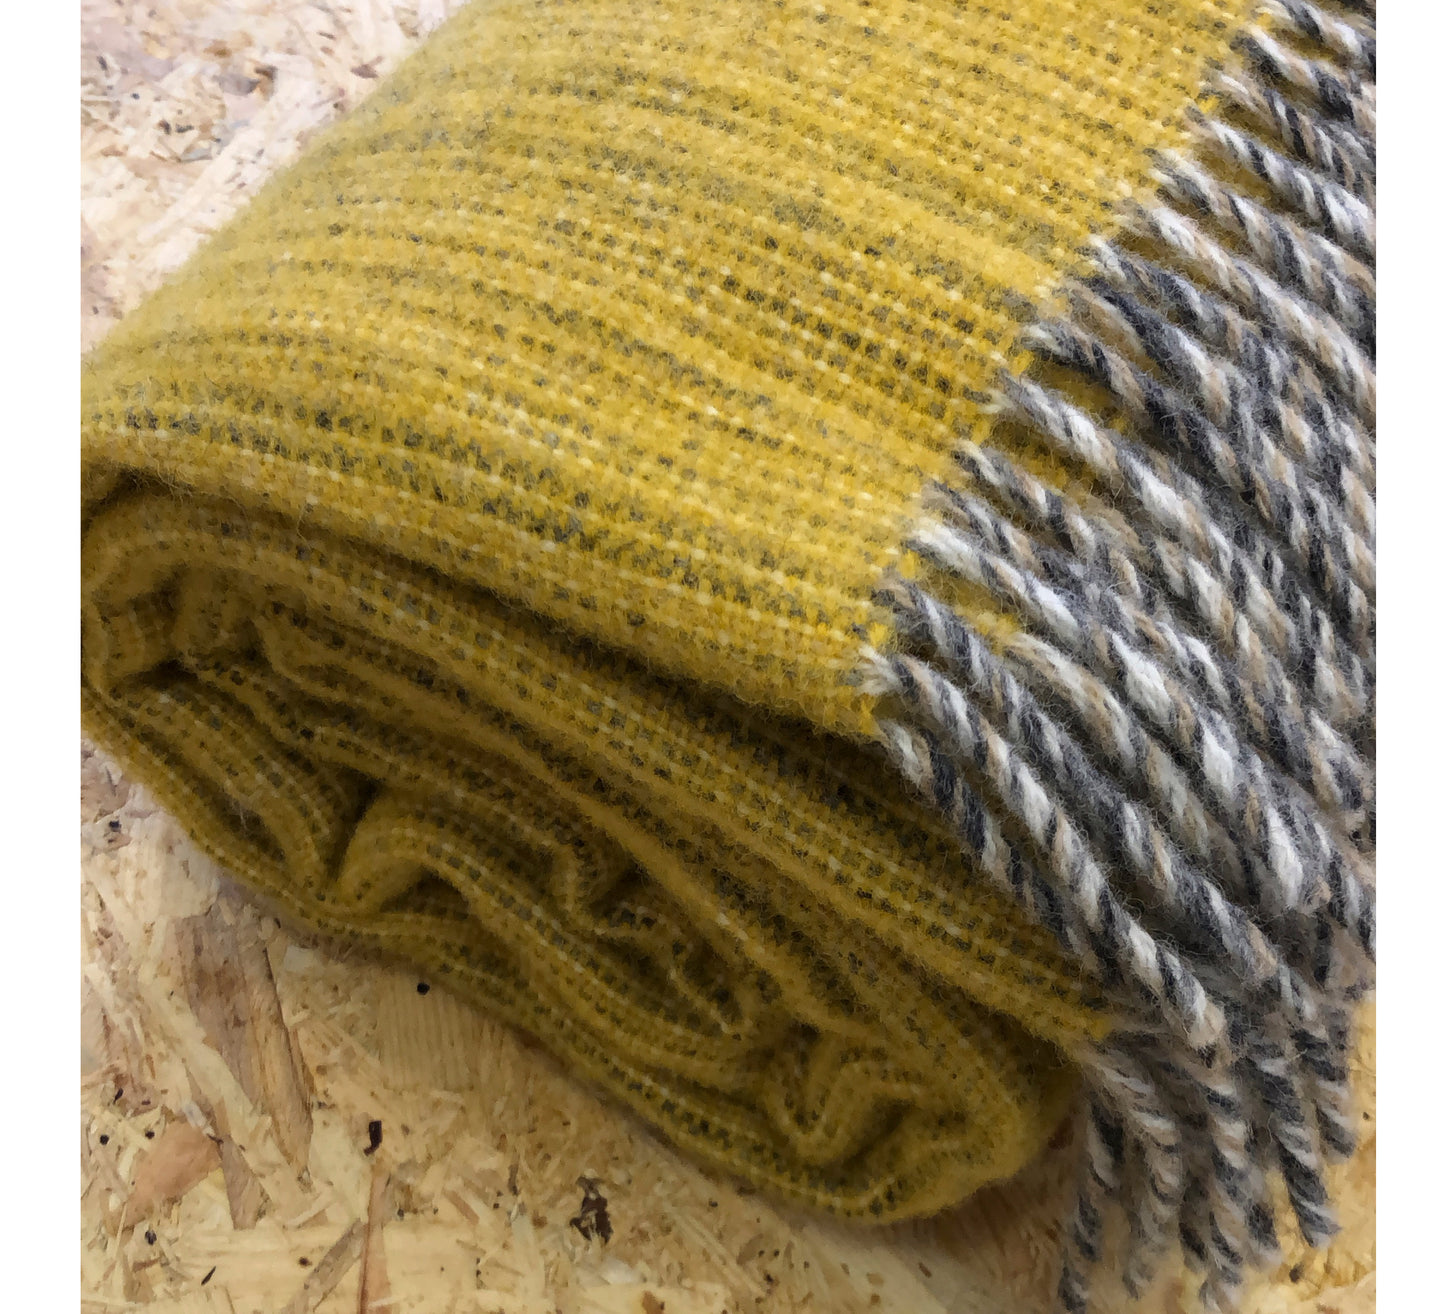 Bjork wool throw/blanket - Mustard